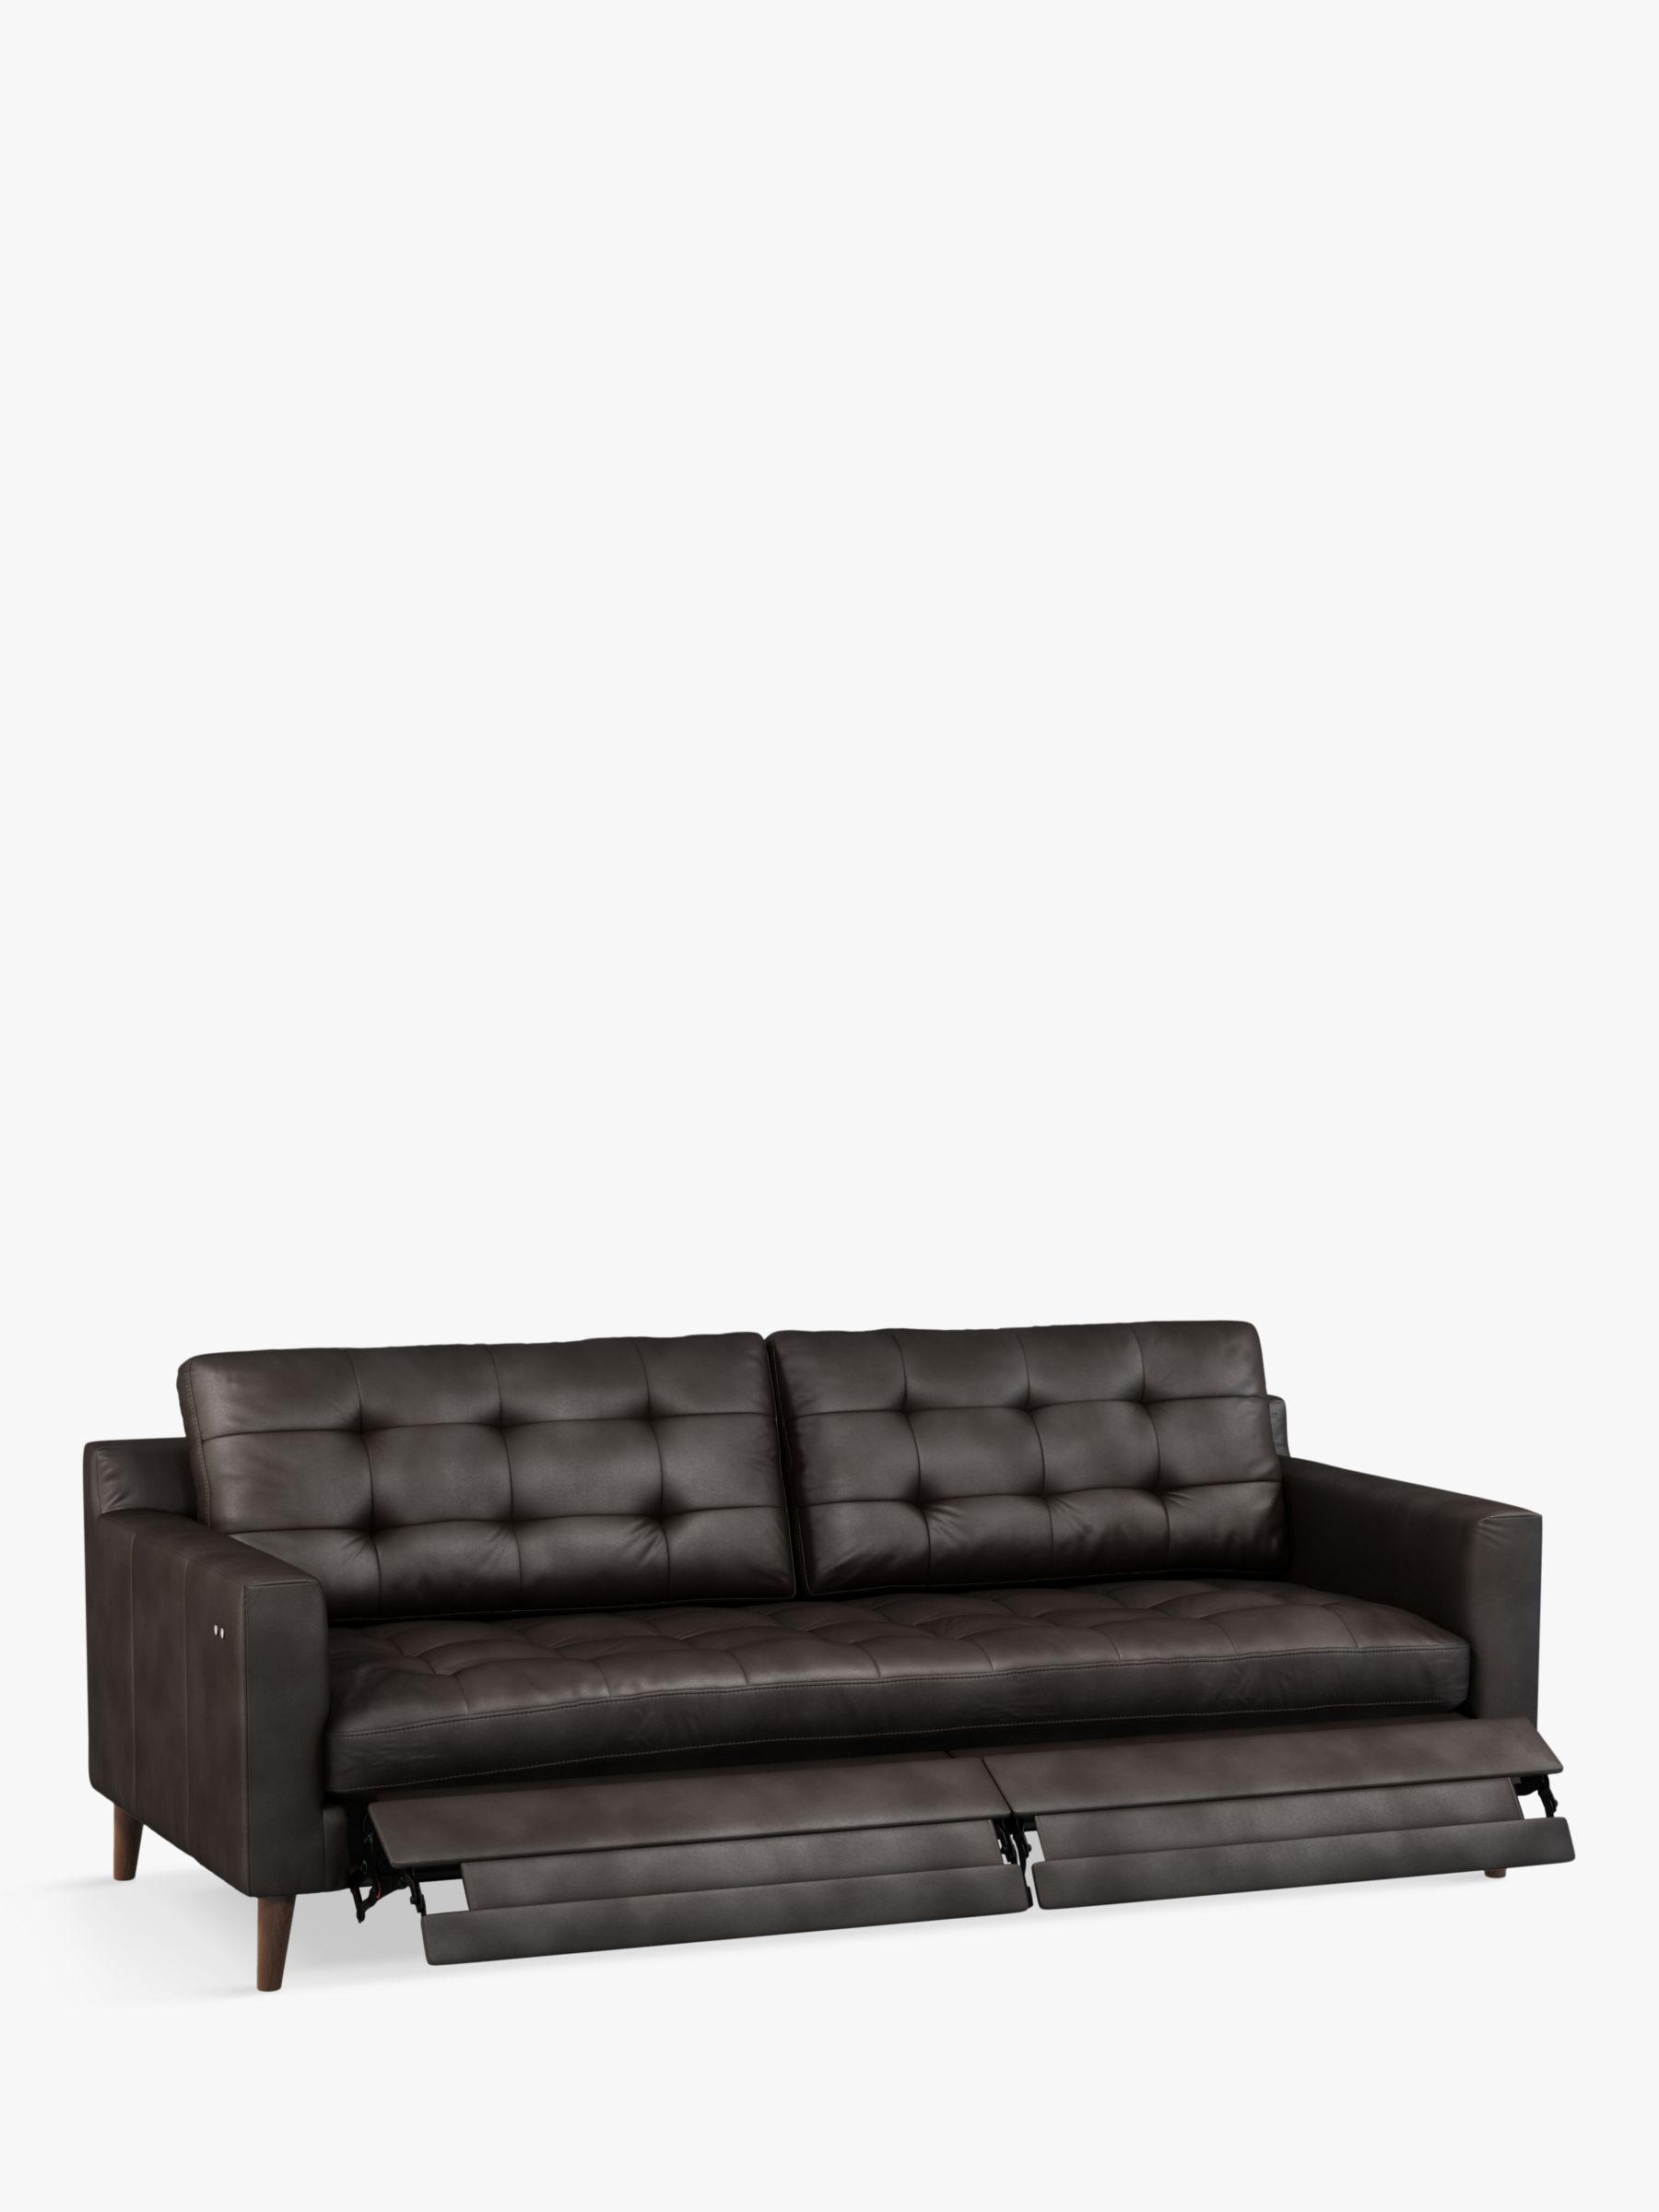 Draper Range, John Lewis Draper Motion Large 3 Seater Leather Sofa with Footrest Mechanism, Dark Leg, Contempo Dark Chocoalate